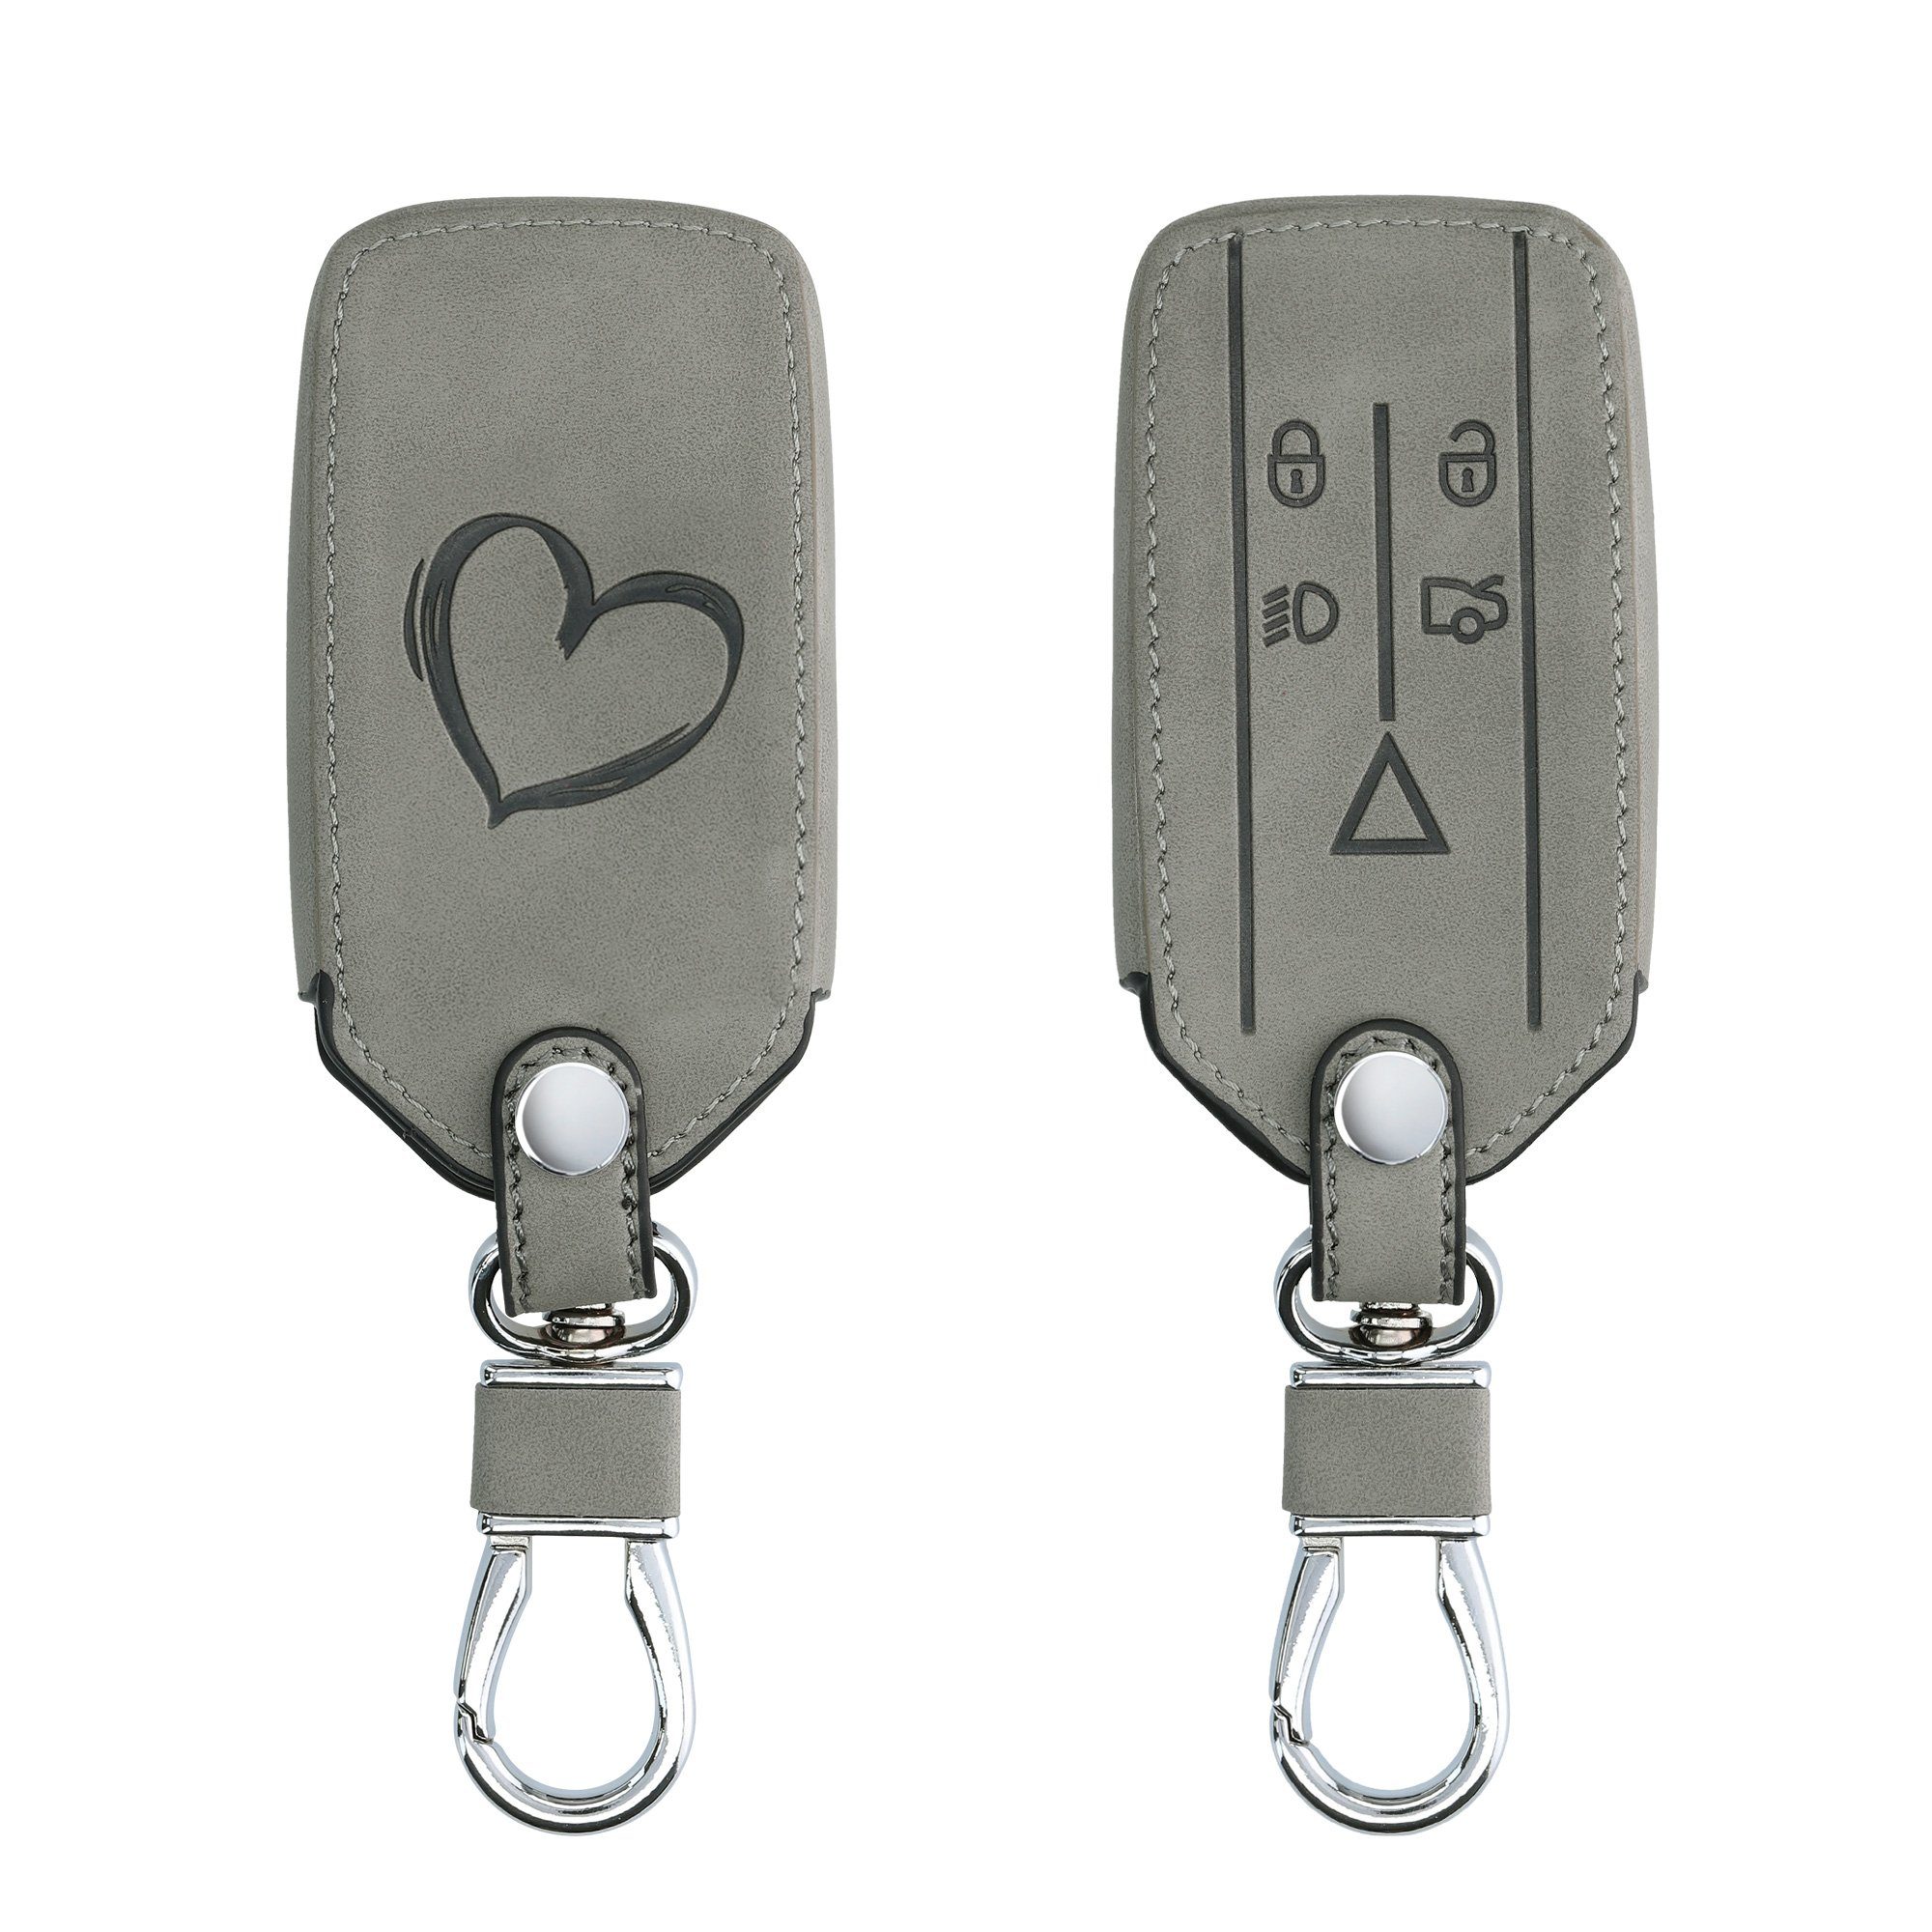 【Echt】 kwmobile Schlüsseltasche Autoschlüssel für Kunstleder Hülle Schutzhülle Cover Schlüsselhülle Nubuklederoptik Jaguar, 